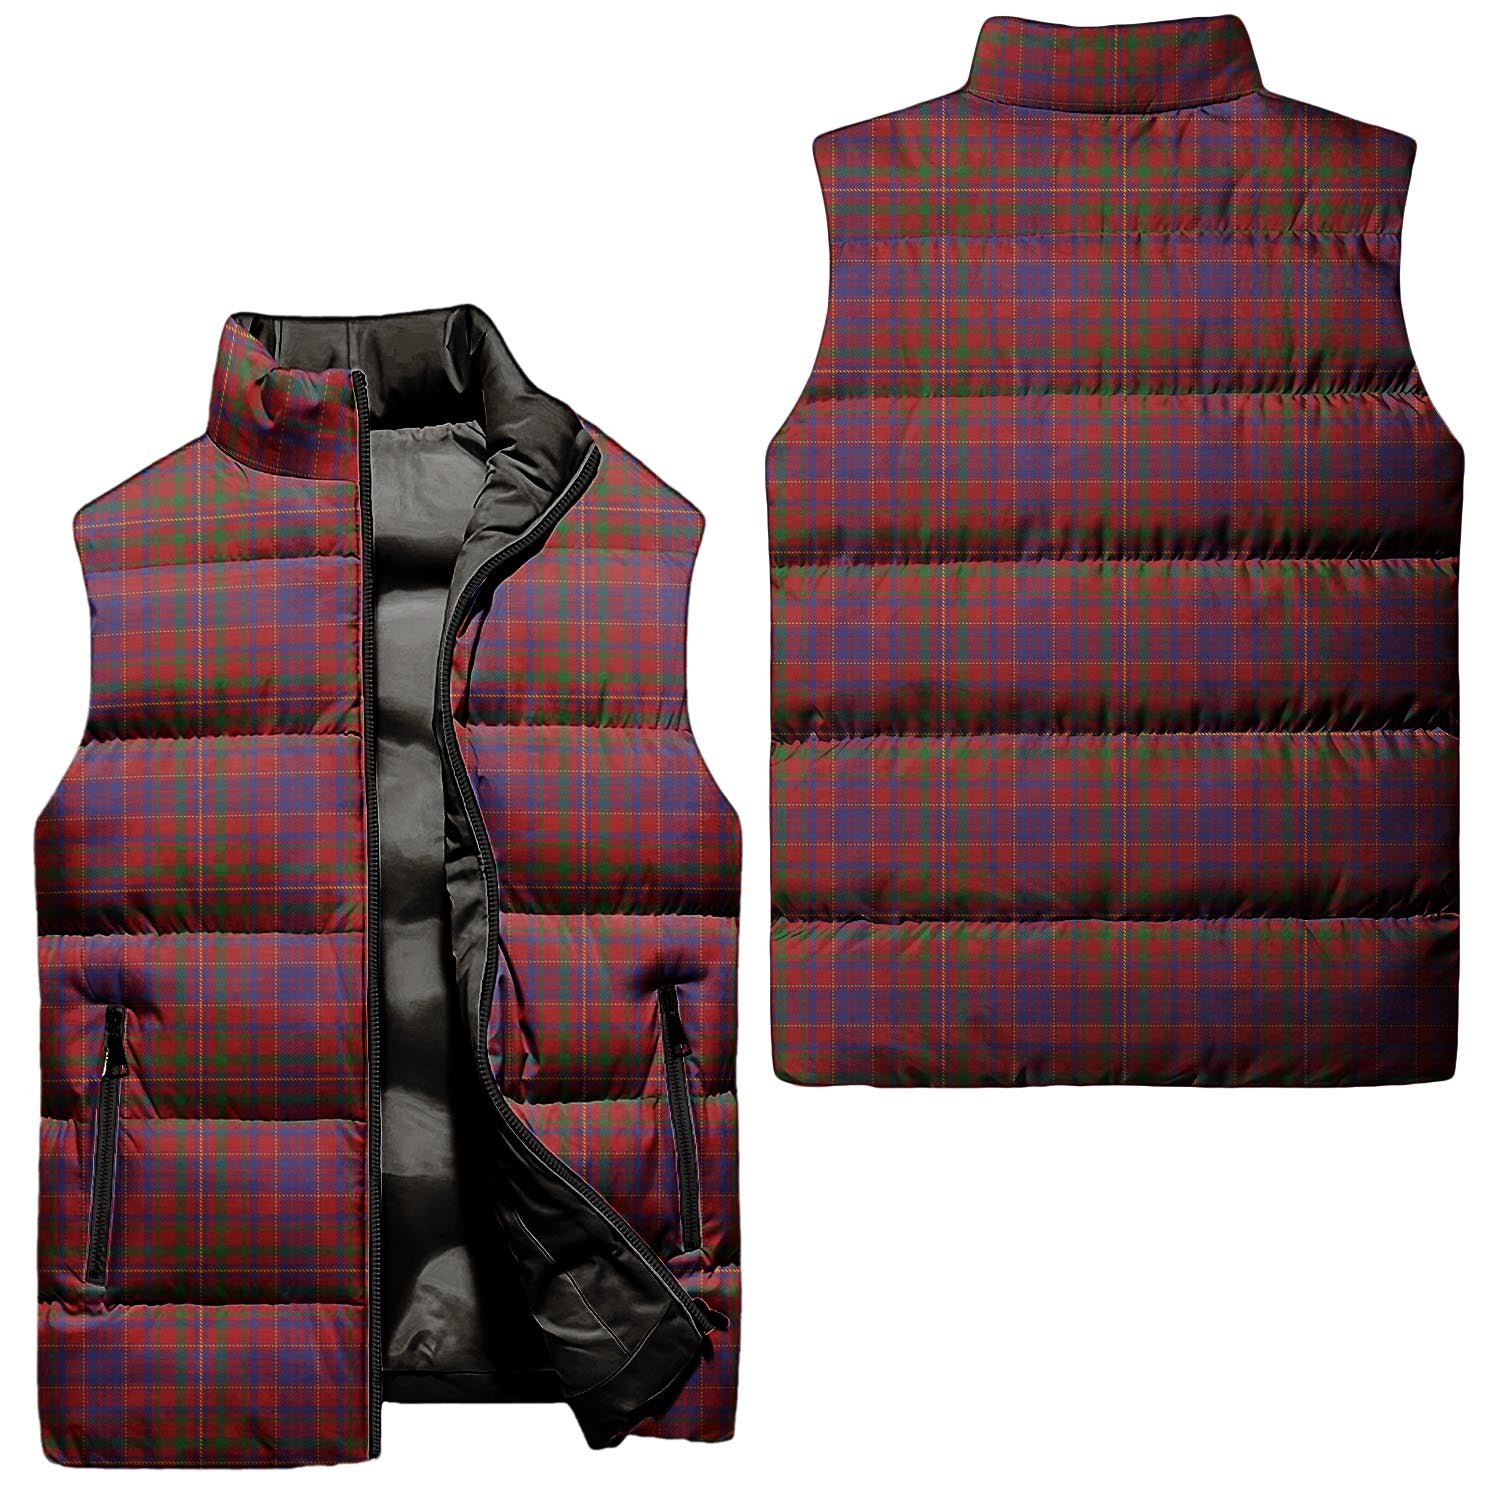 macleod-red-tartan-puffer-vest-tartan-plaid-sleeveless-down-jacket